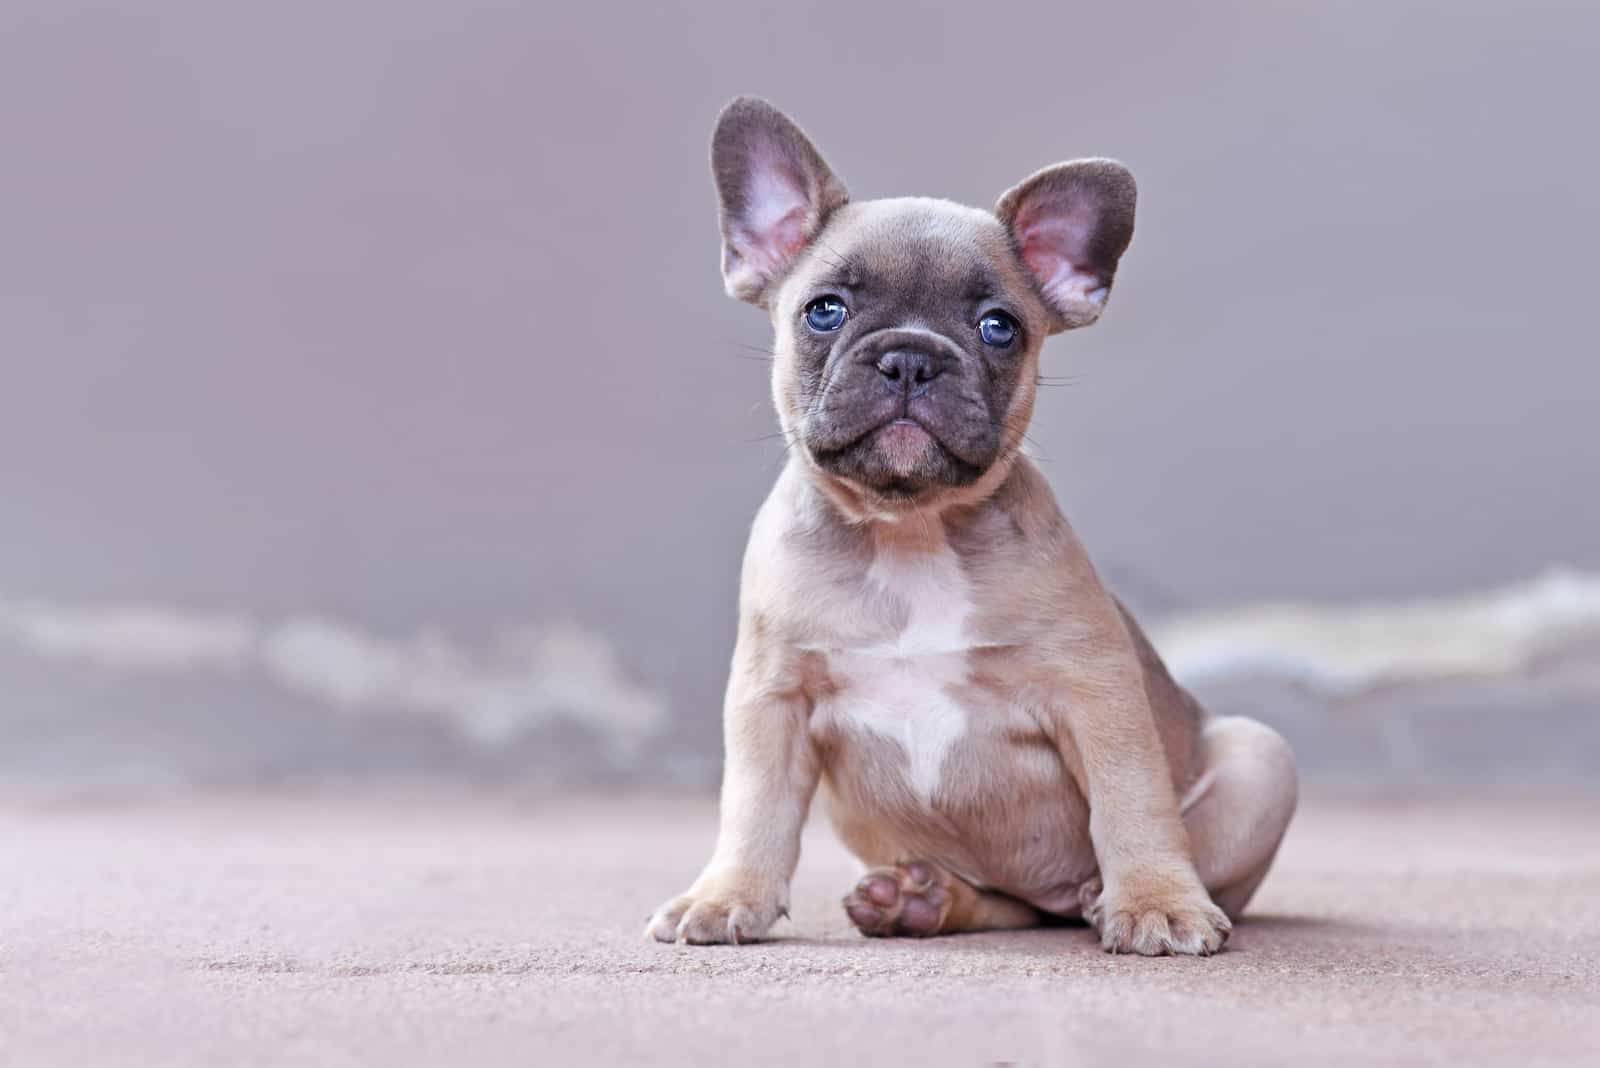 French Bulldog puppy with blue eyes